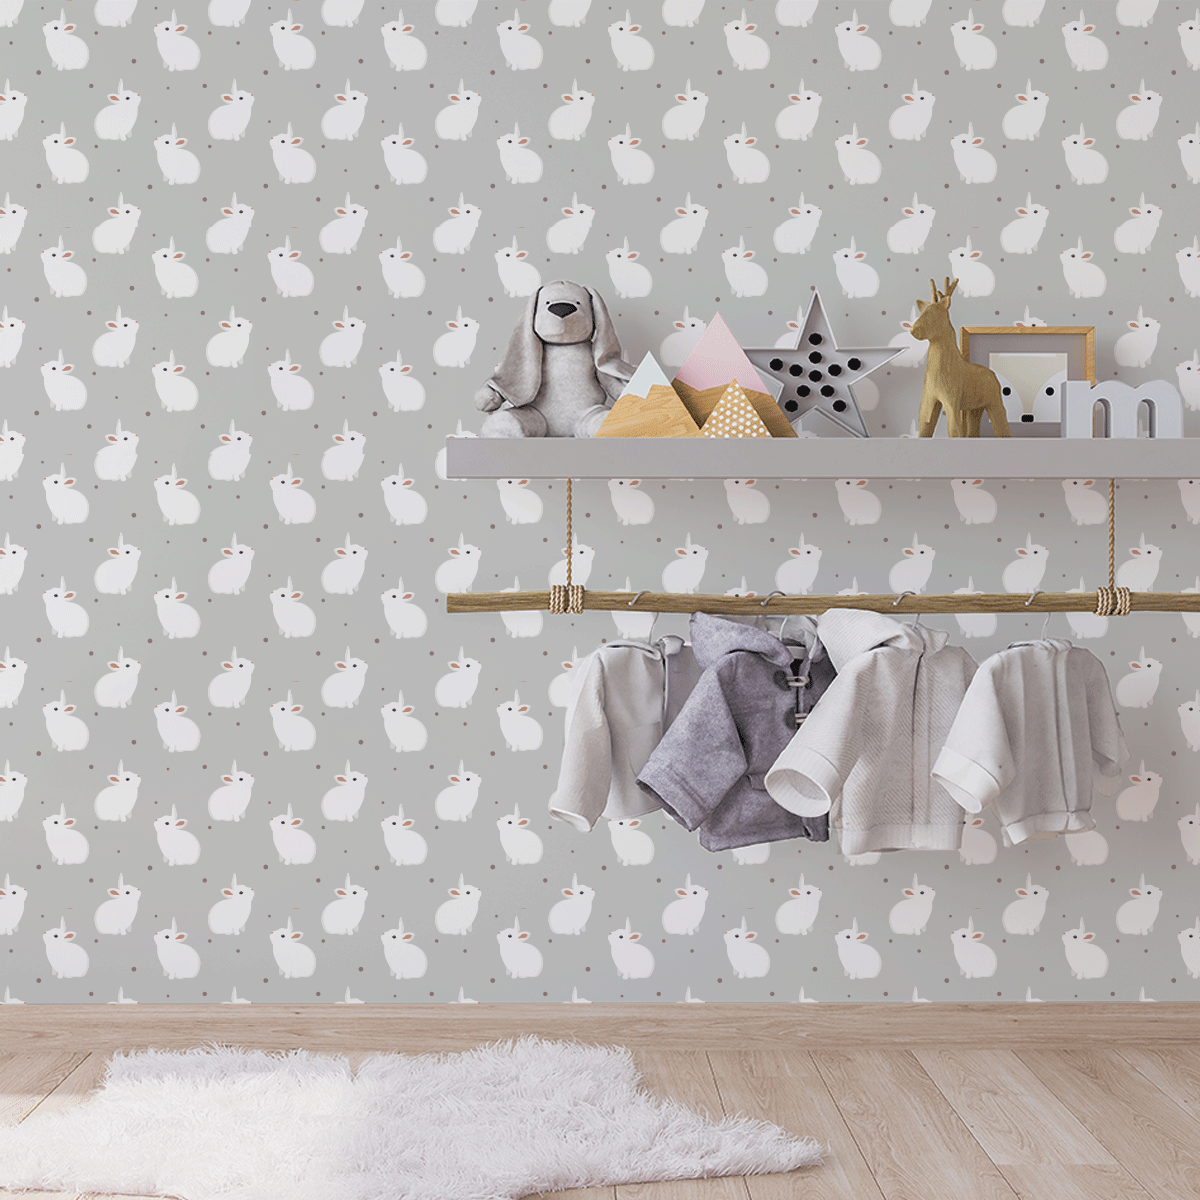 removable wallpaper, kids bedroom wallpaper, nursery wallpaper, kids bedroom ideas, nursery ideas, white bunnies wallpaper, white rabbits wallpaper